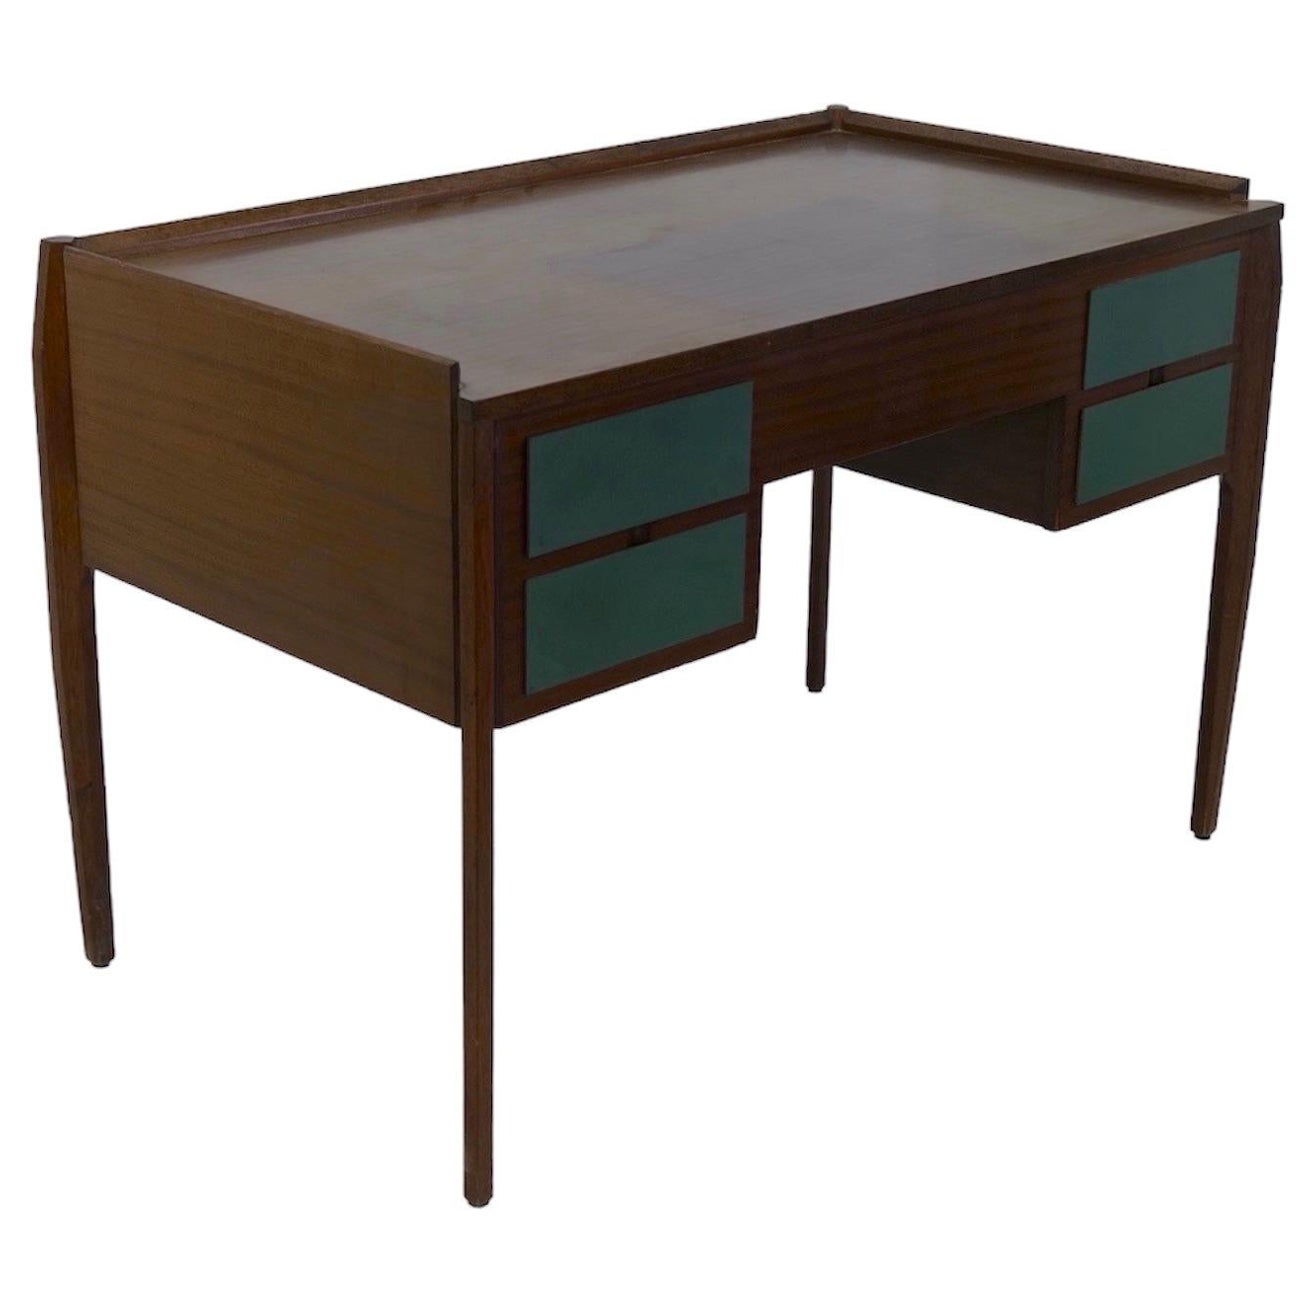 Italian Midcentury Vittorio D'assi Desk, 1960s For Sale